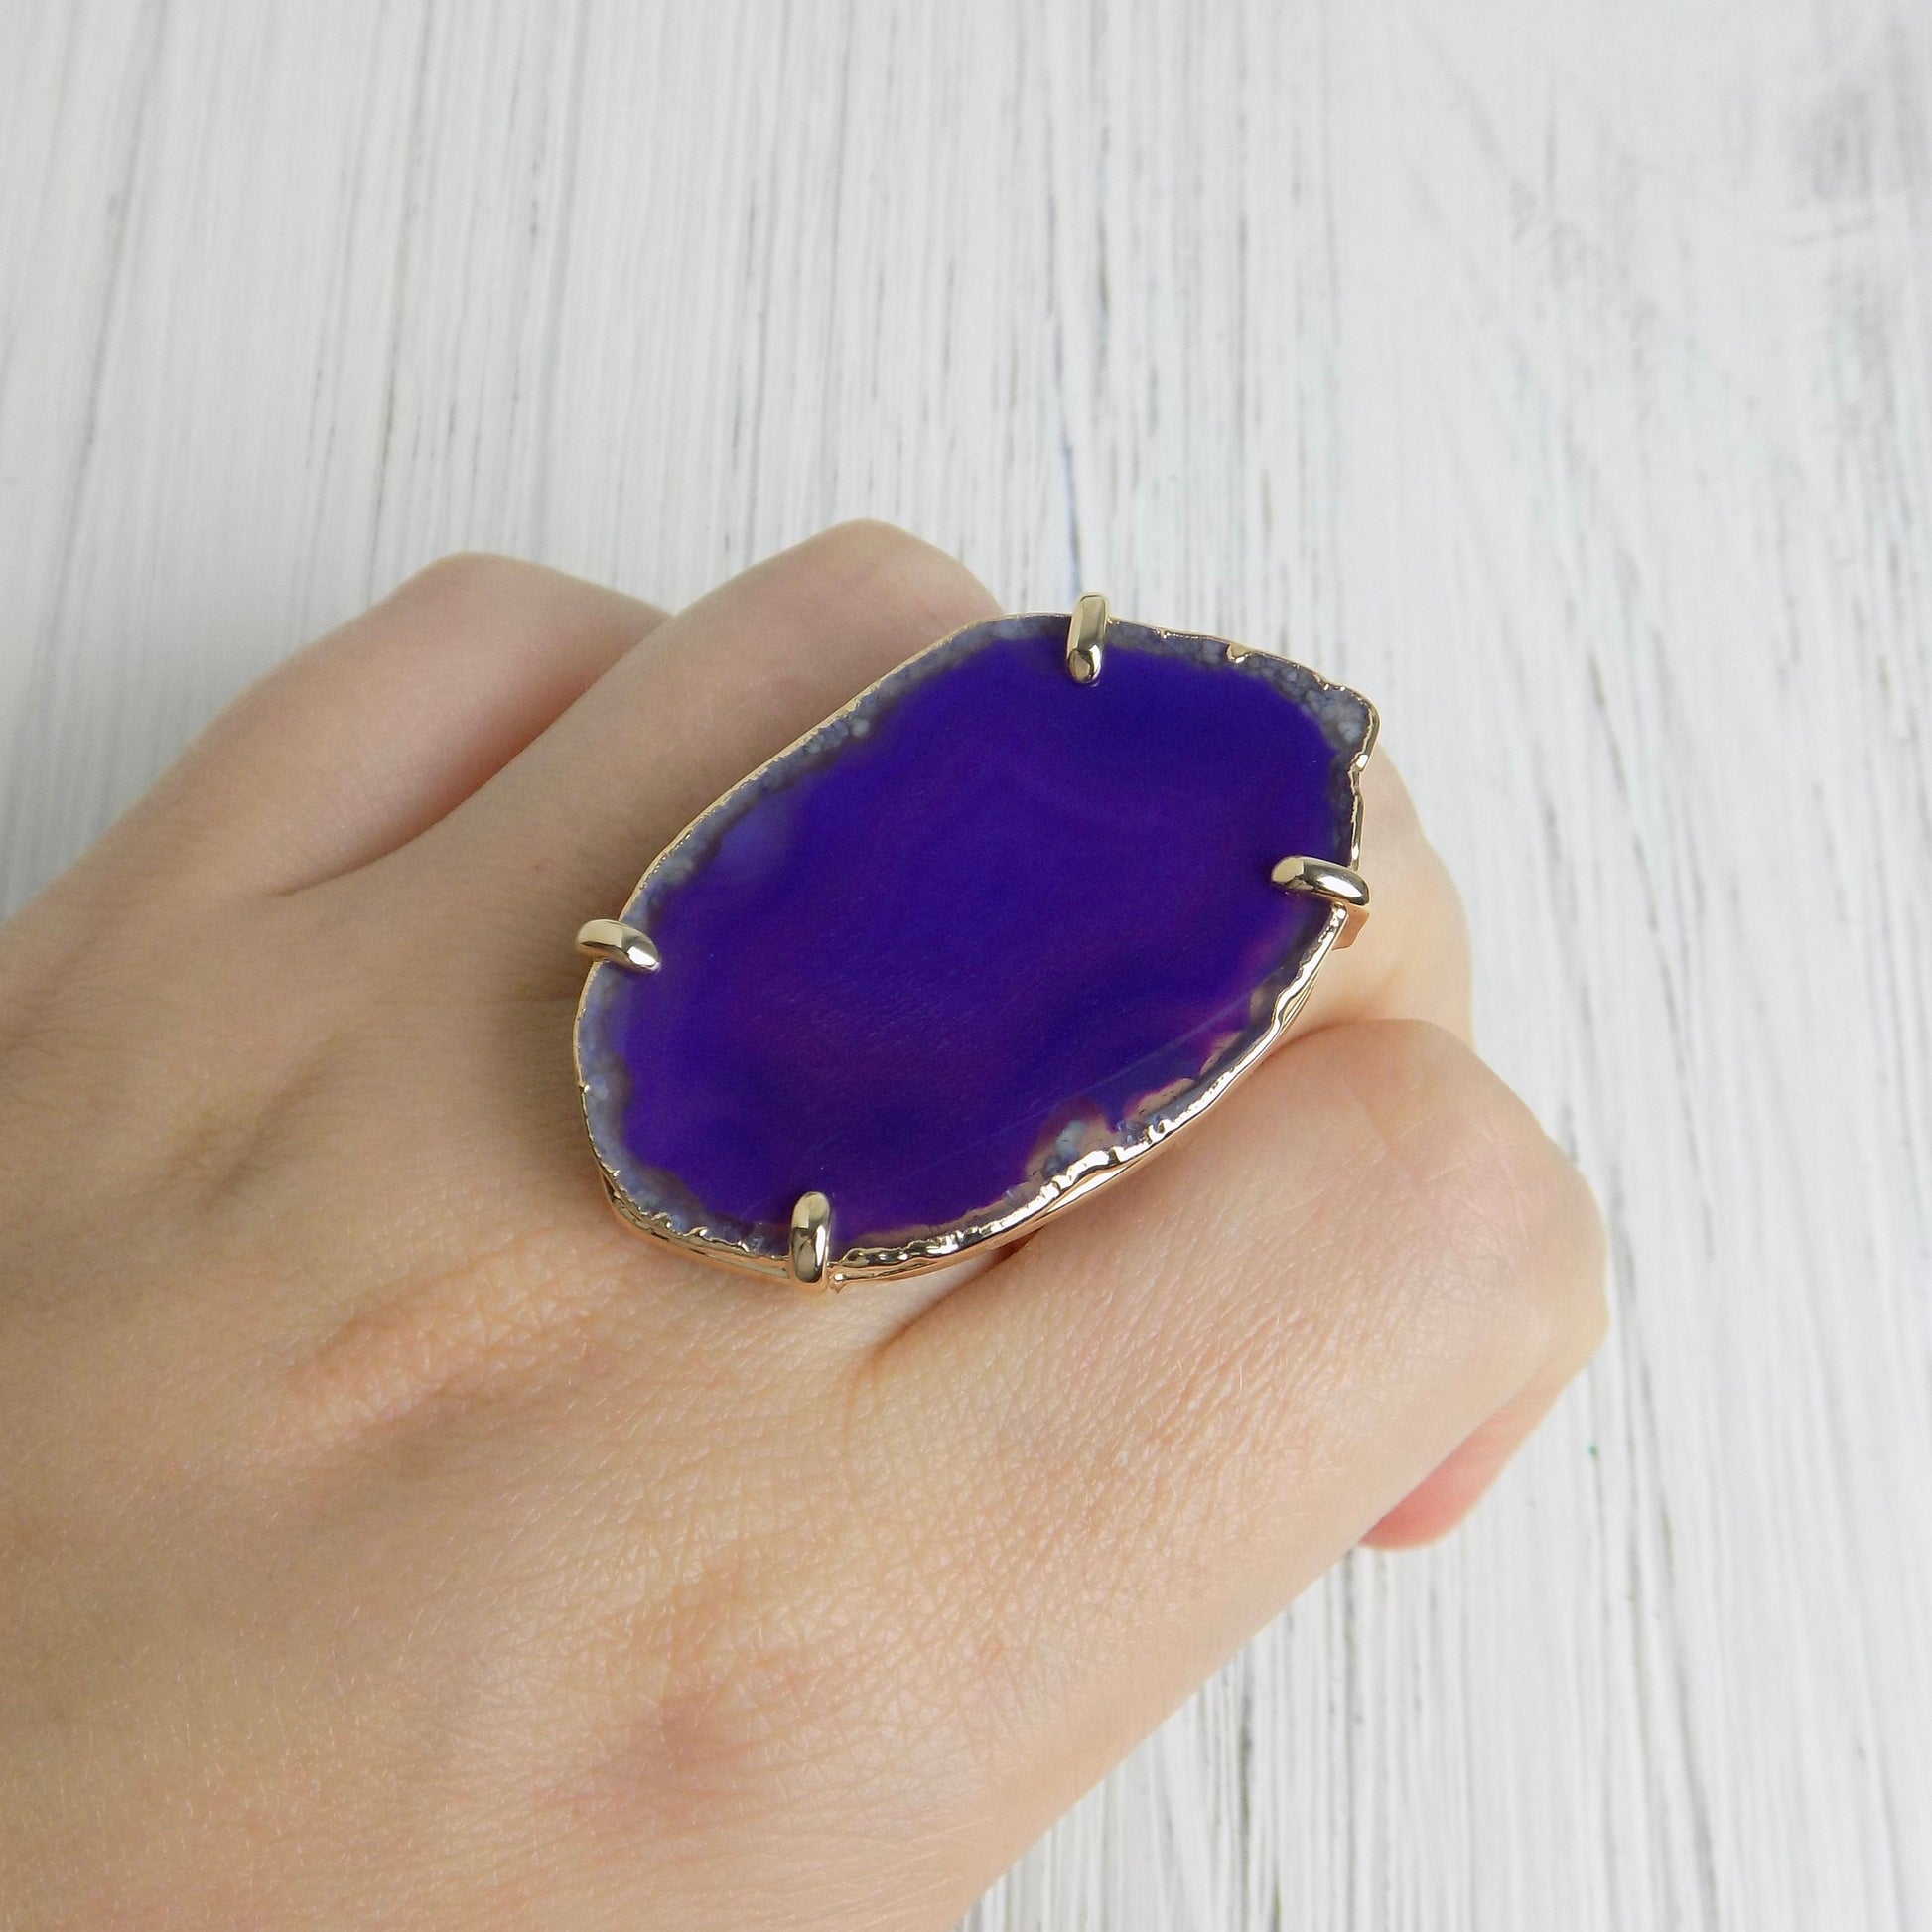 Boho Purple Agate Ring, Geode Ring, Statement Ring, Statement Jewelry Slice Agate Ring Large Stone Ring Crystal Ring Gold Adjustable G14-197